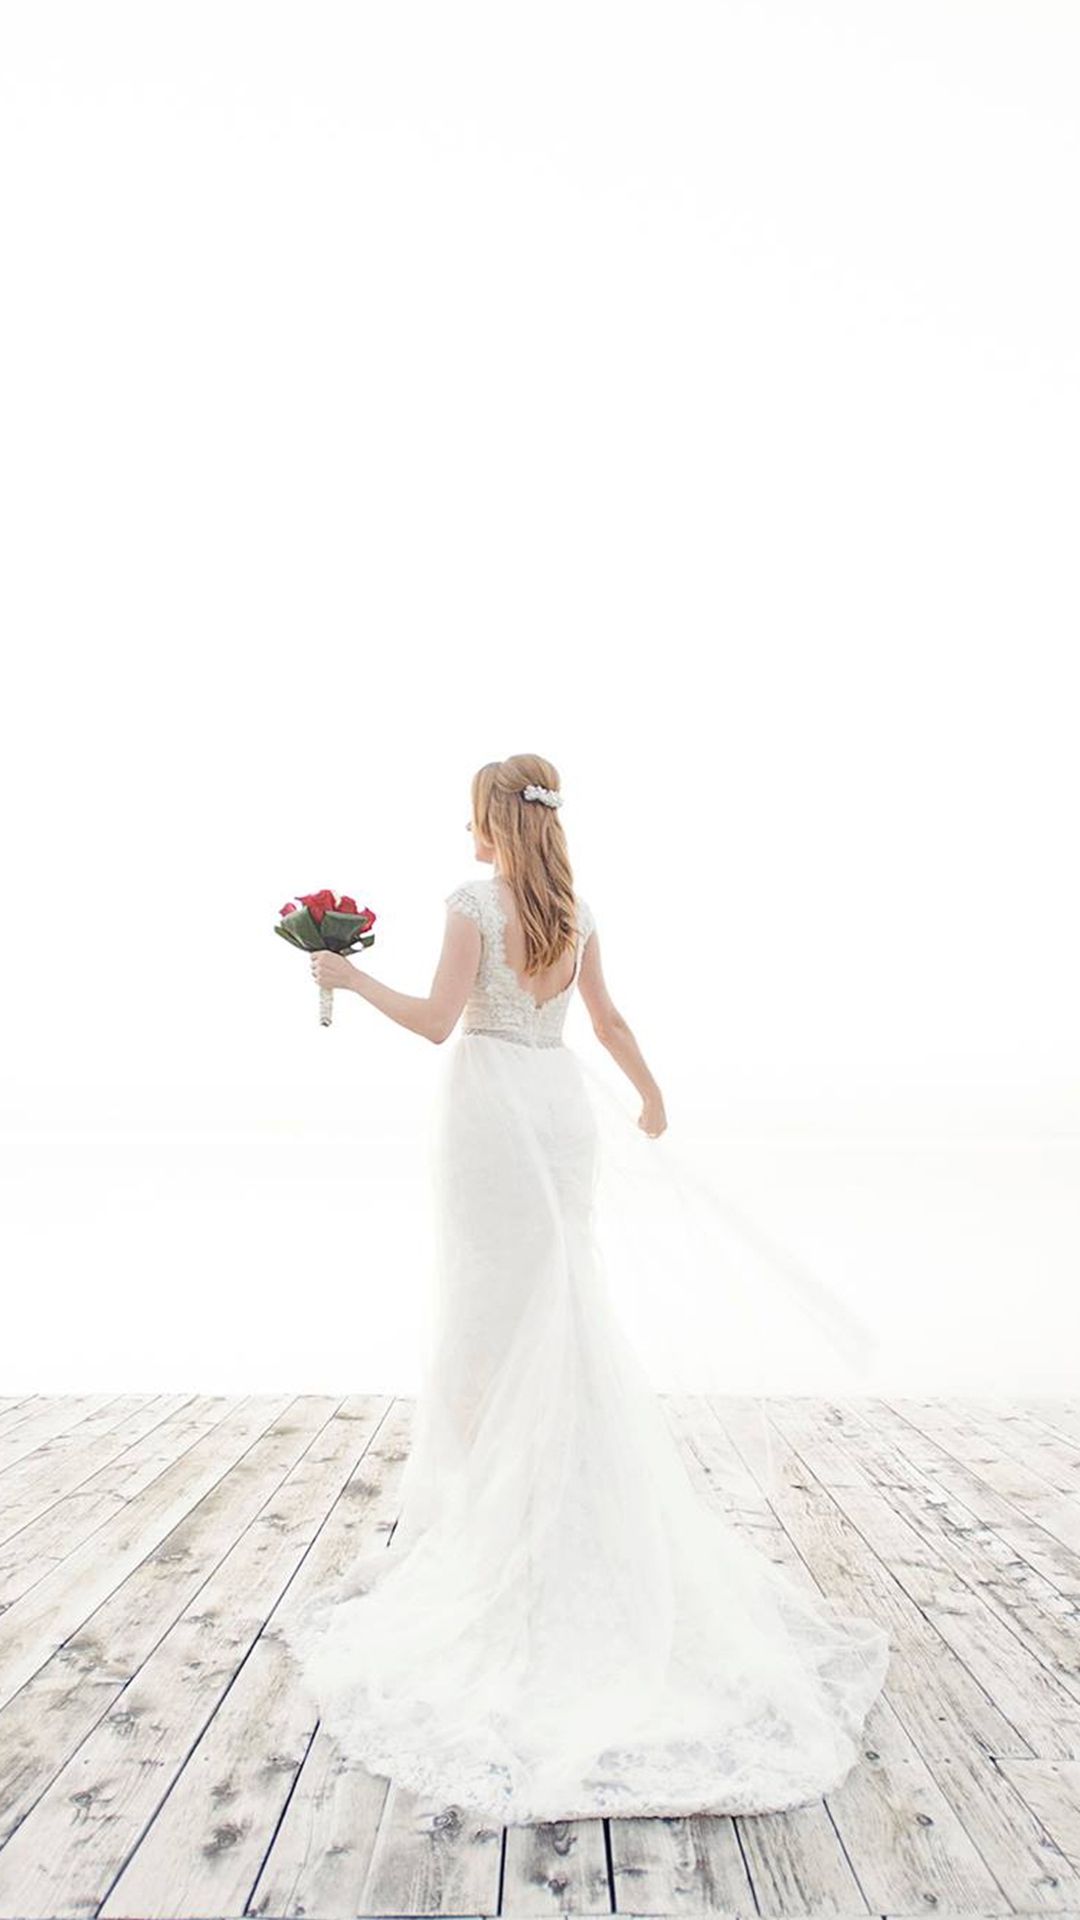 Beautiful Wedding Dress Photography iPhone 8 Wallpaper Free Download